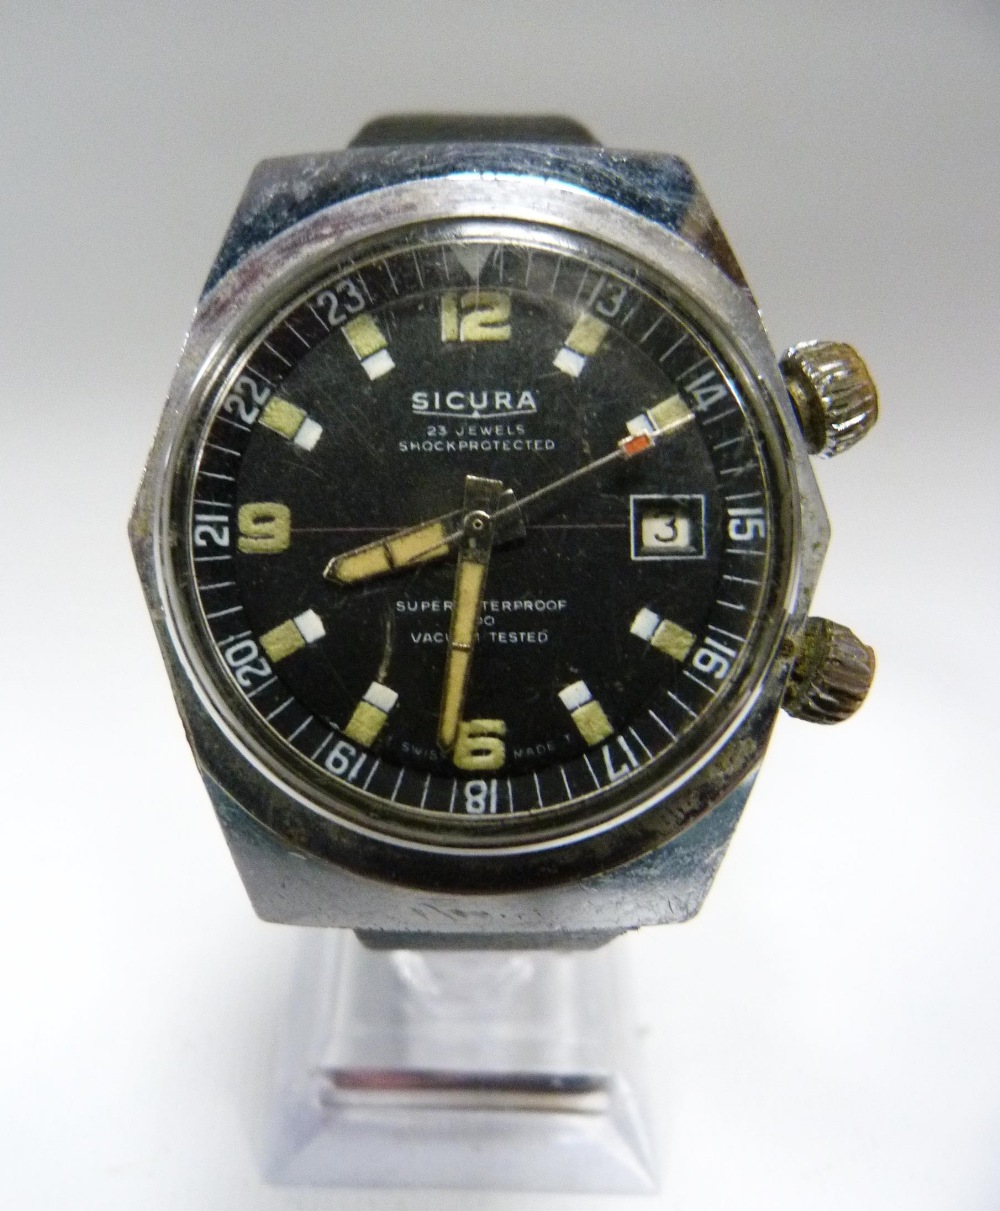 Sicura 23 jewels Superwaterproof 400 vacuum tested manual wind diver's watch, c. 1960s, case - Image 6 of 13